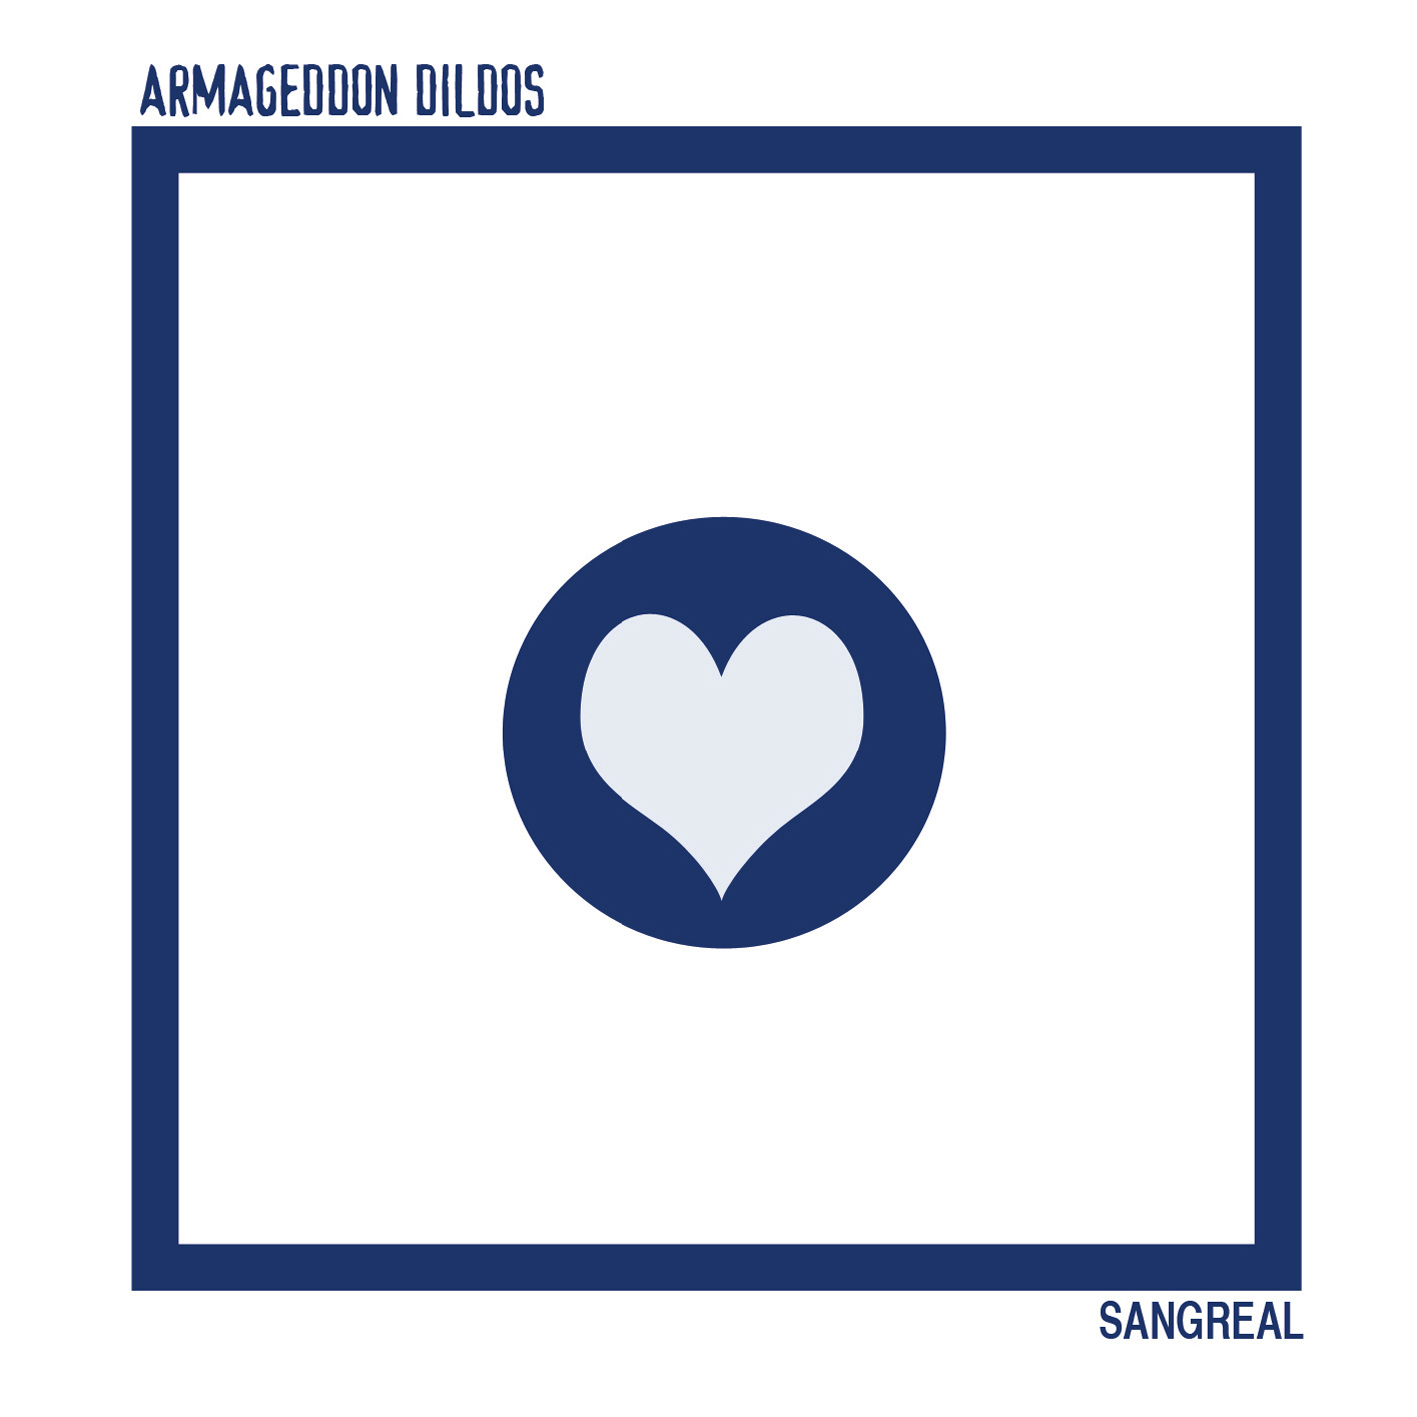 Armageddon Dildos - Sangreal